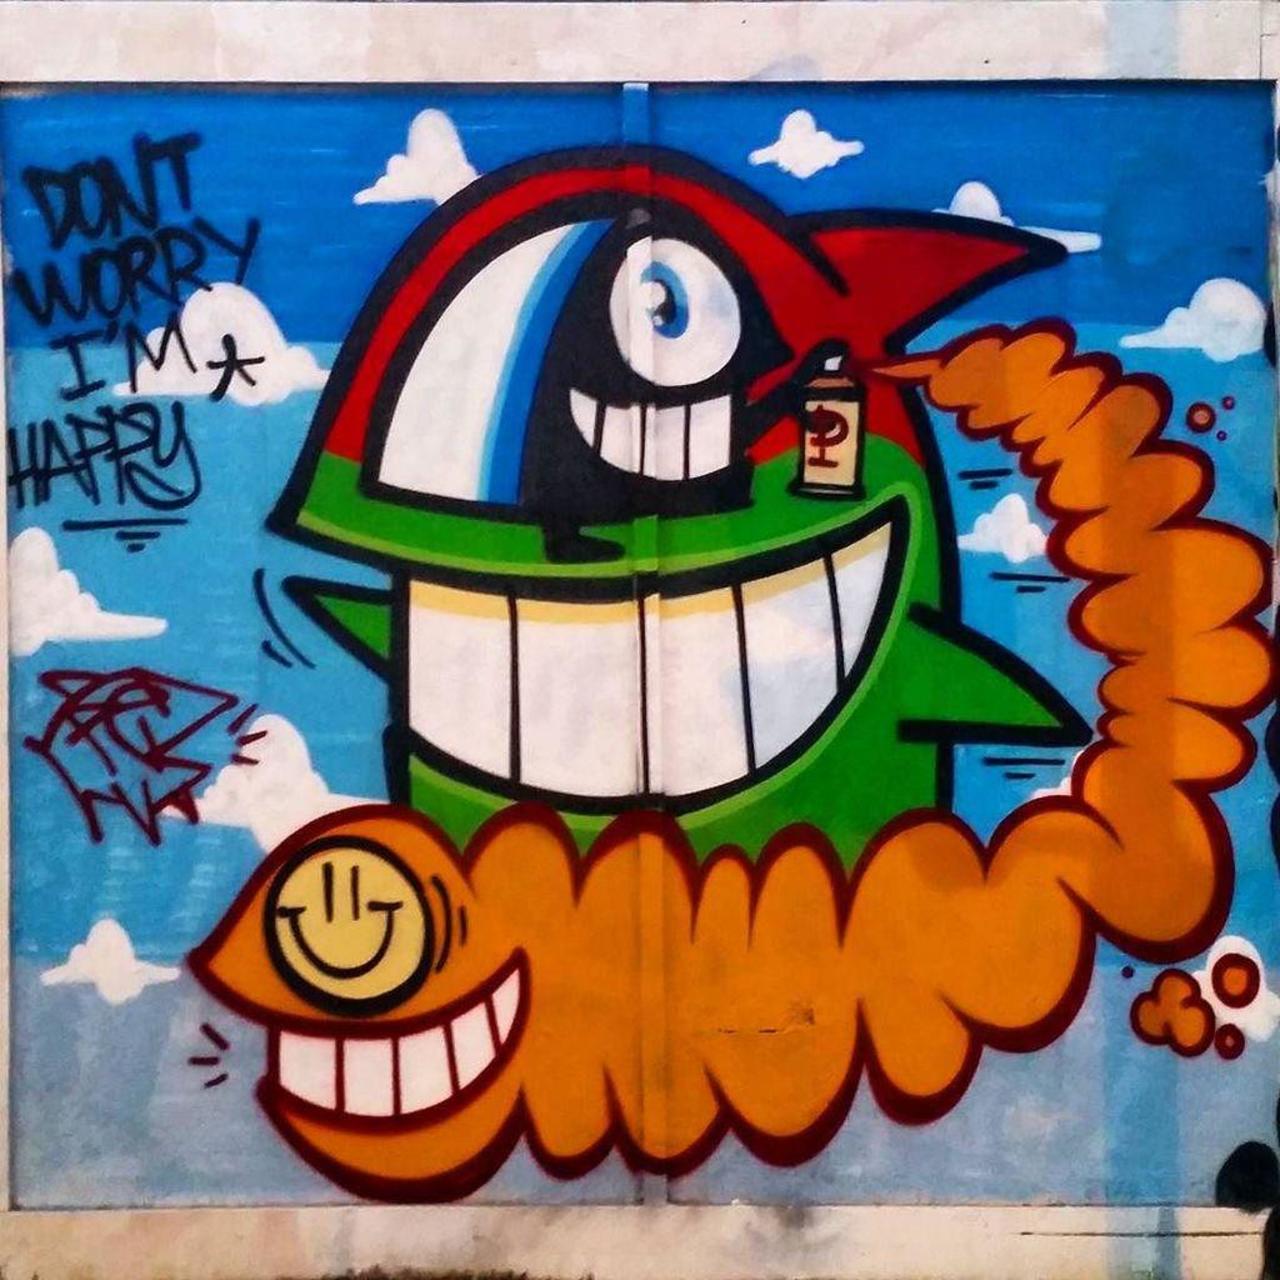 Don't Worry I'm Happy by @pezbarcelona #StreetArt #StreetArtLondon #LondonStreetArt #London #Graffiti #GraffitiLond… http://t.co/avVNn3R2Wi